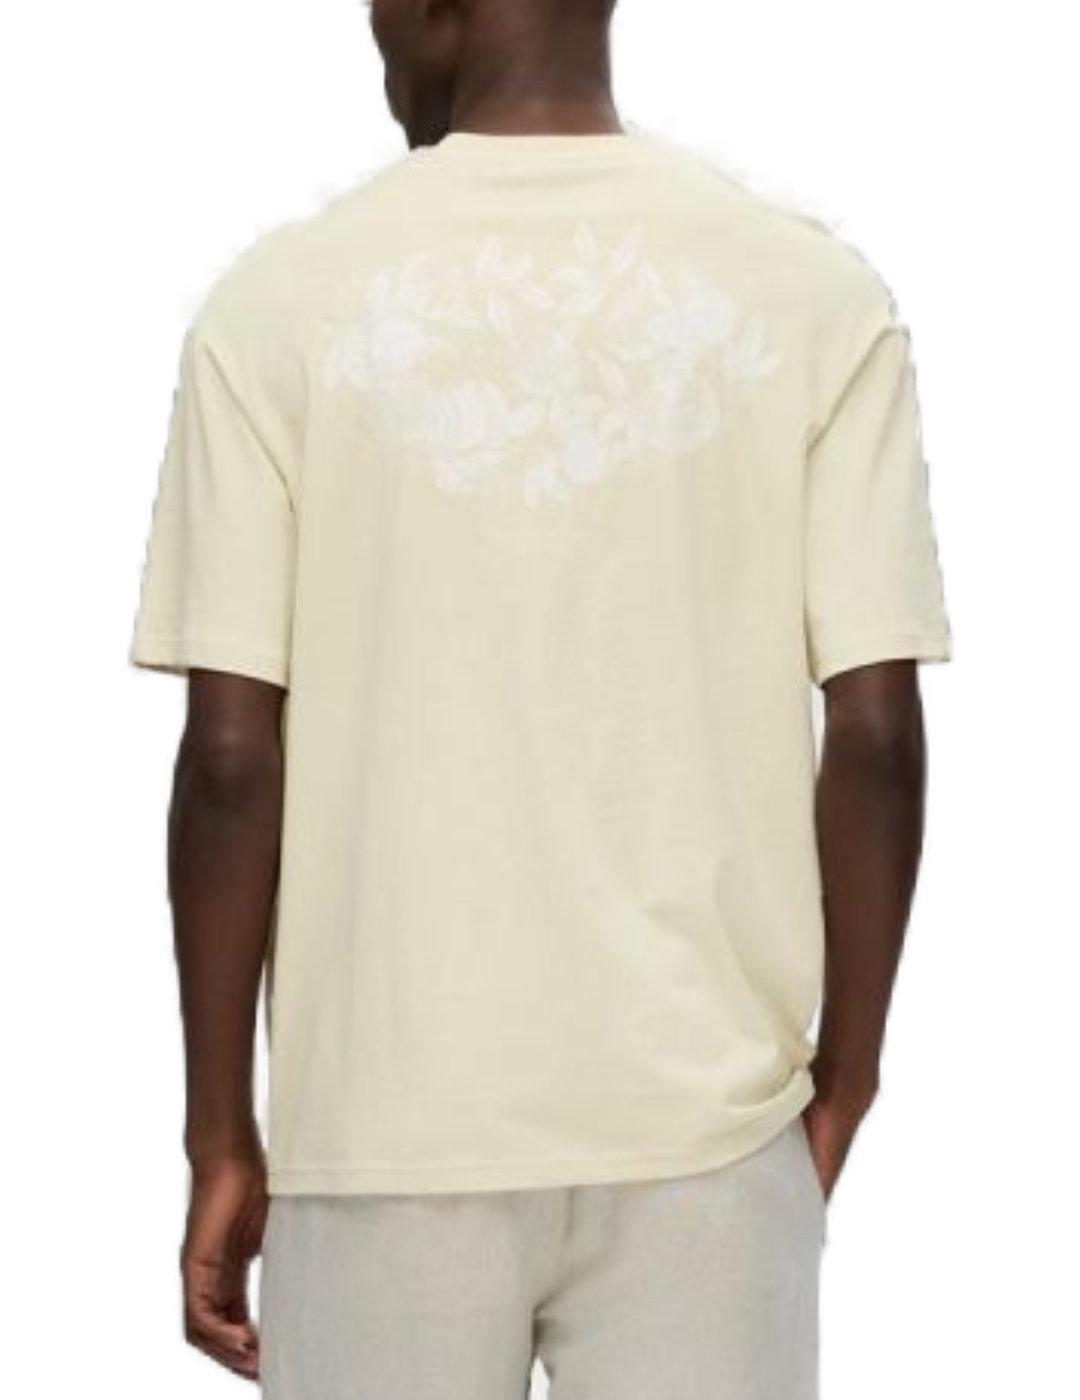 Camiseta Selected Corby beige claro manga corta para hombre